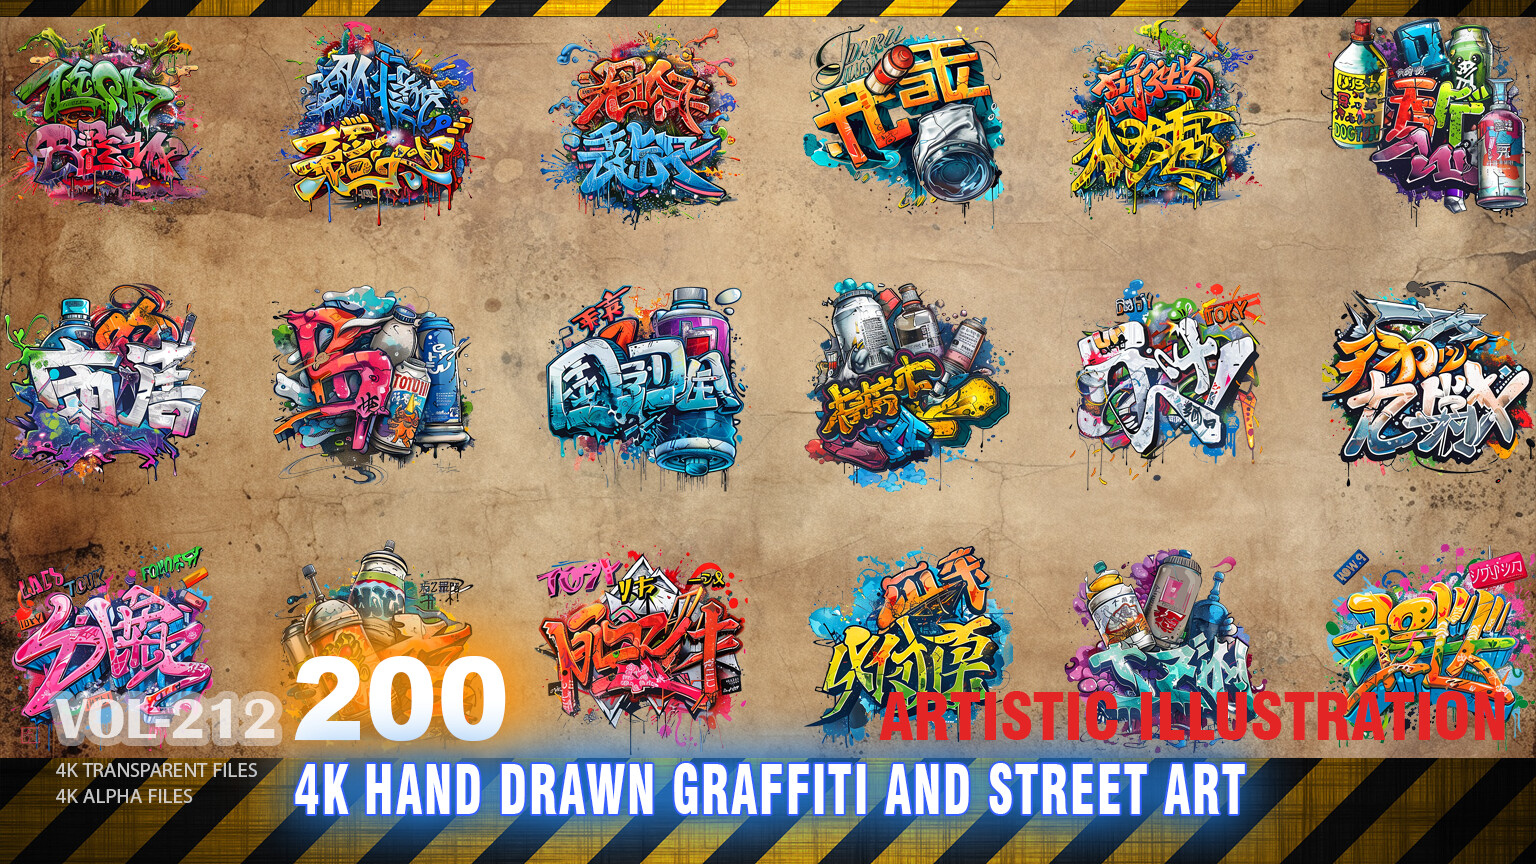 ArtStation - 200 4K HAND DRAWN GRAFFITI AND STREET ART - ARTISTIC 